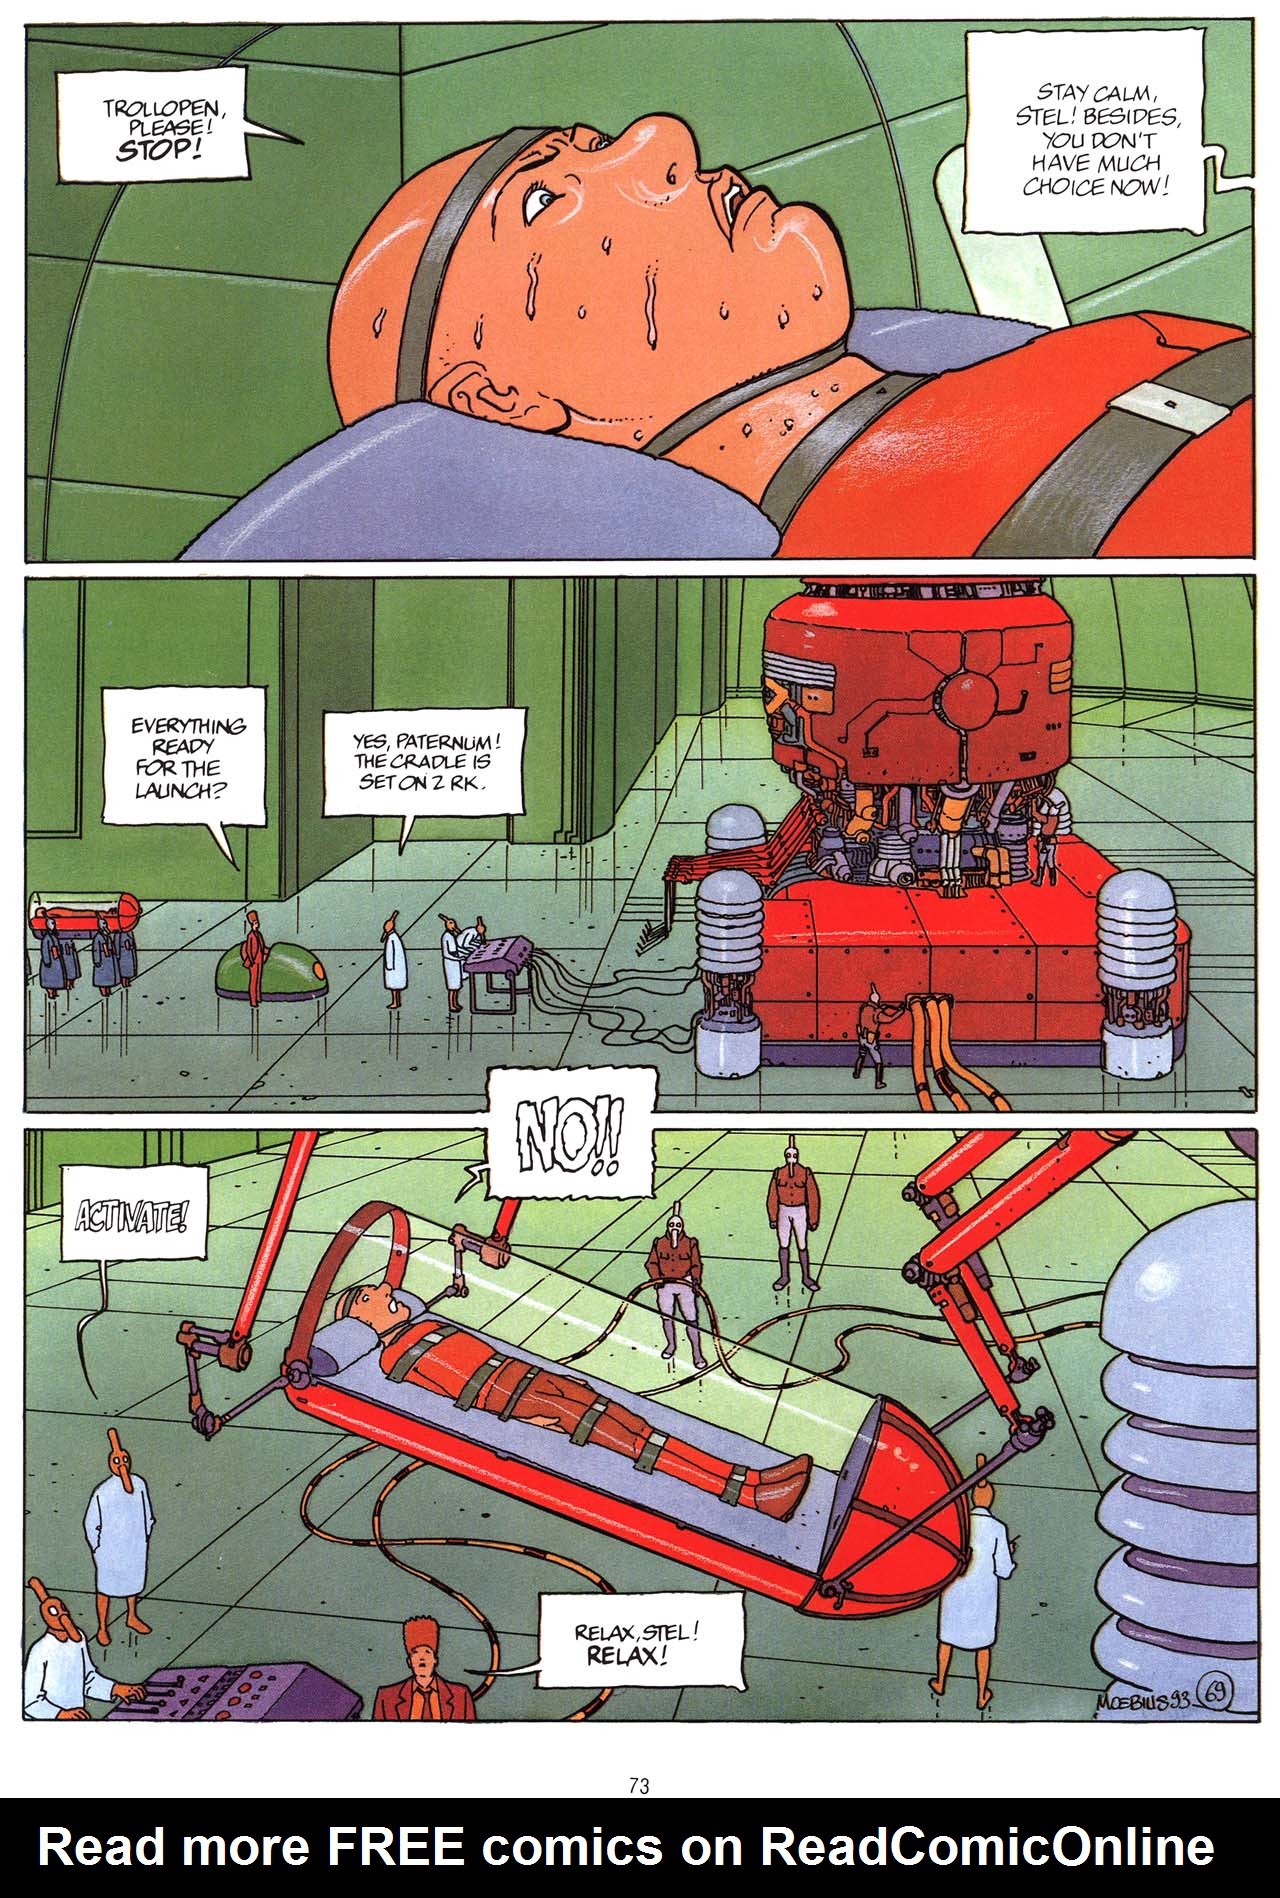 Read online Epic Graphic Novel: Moebius comic -  Issue # TPB 9 - 75